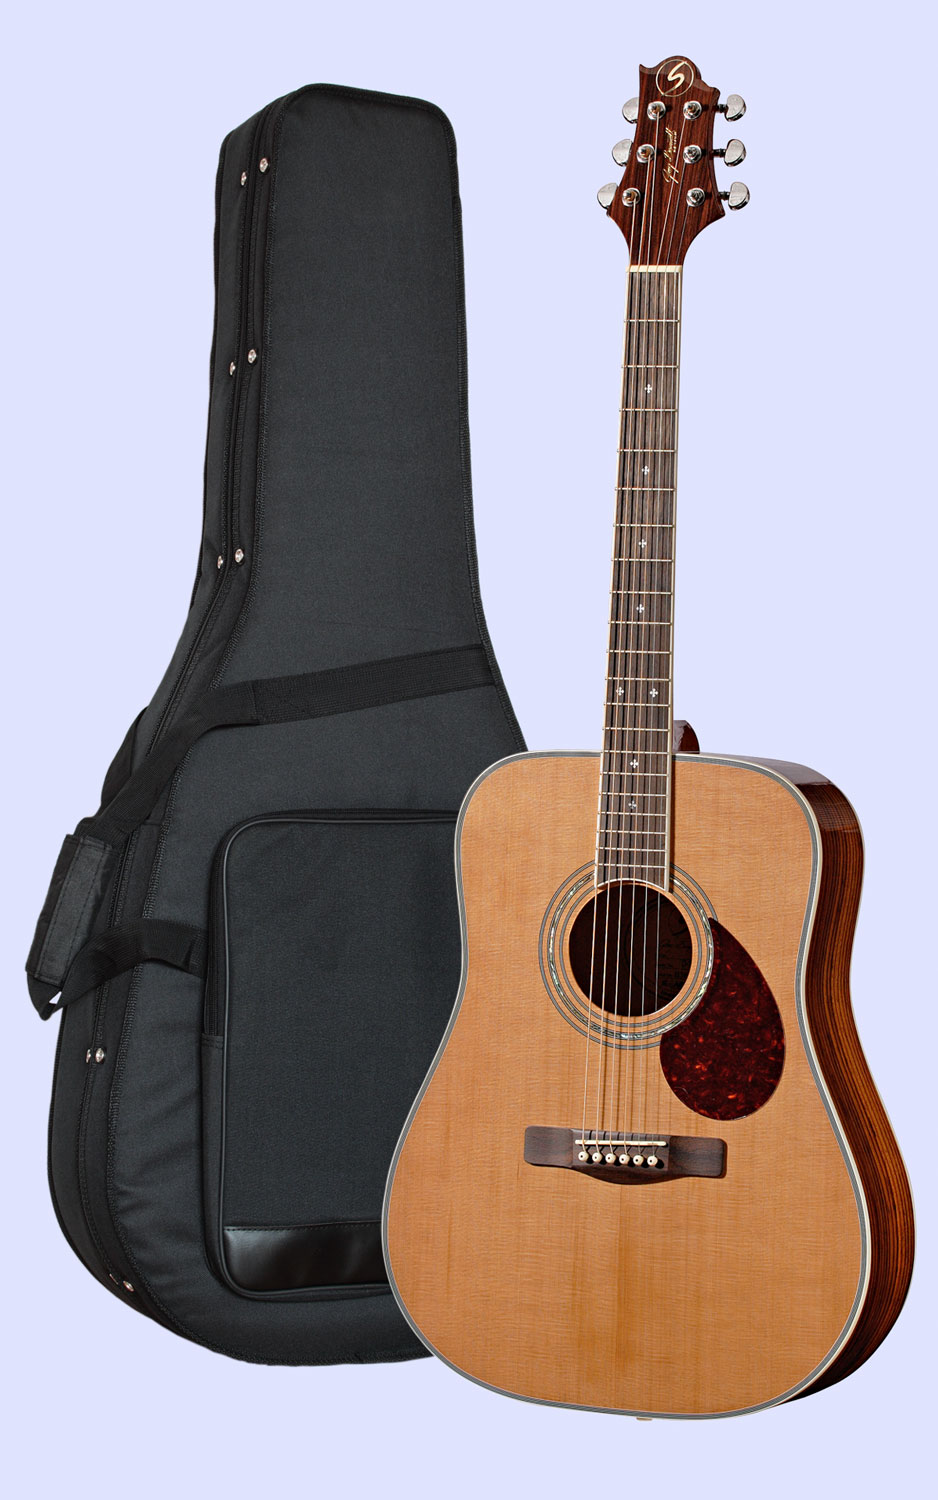 kaufen mieten sga480238 freiburg saiteninstrumente gitarre